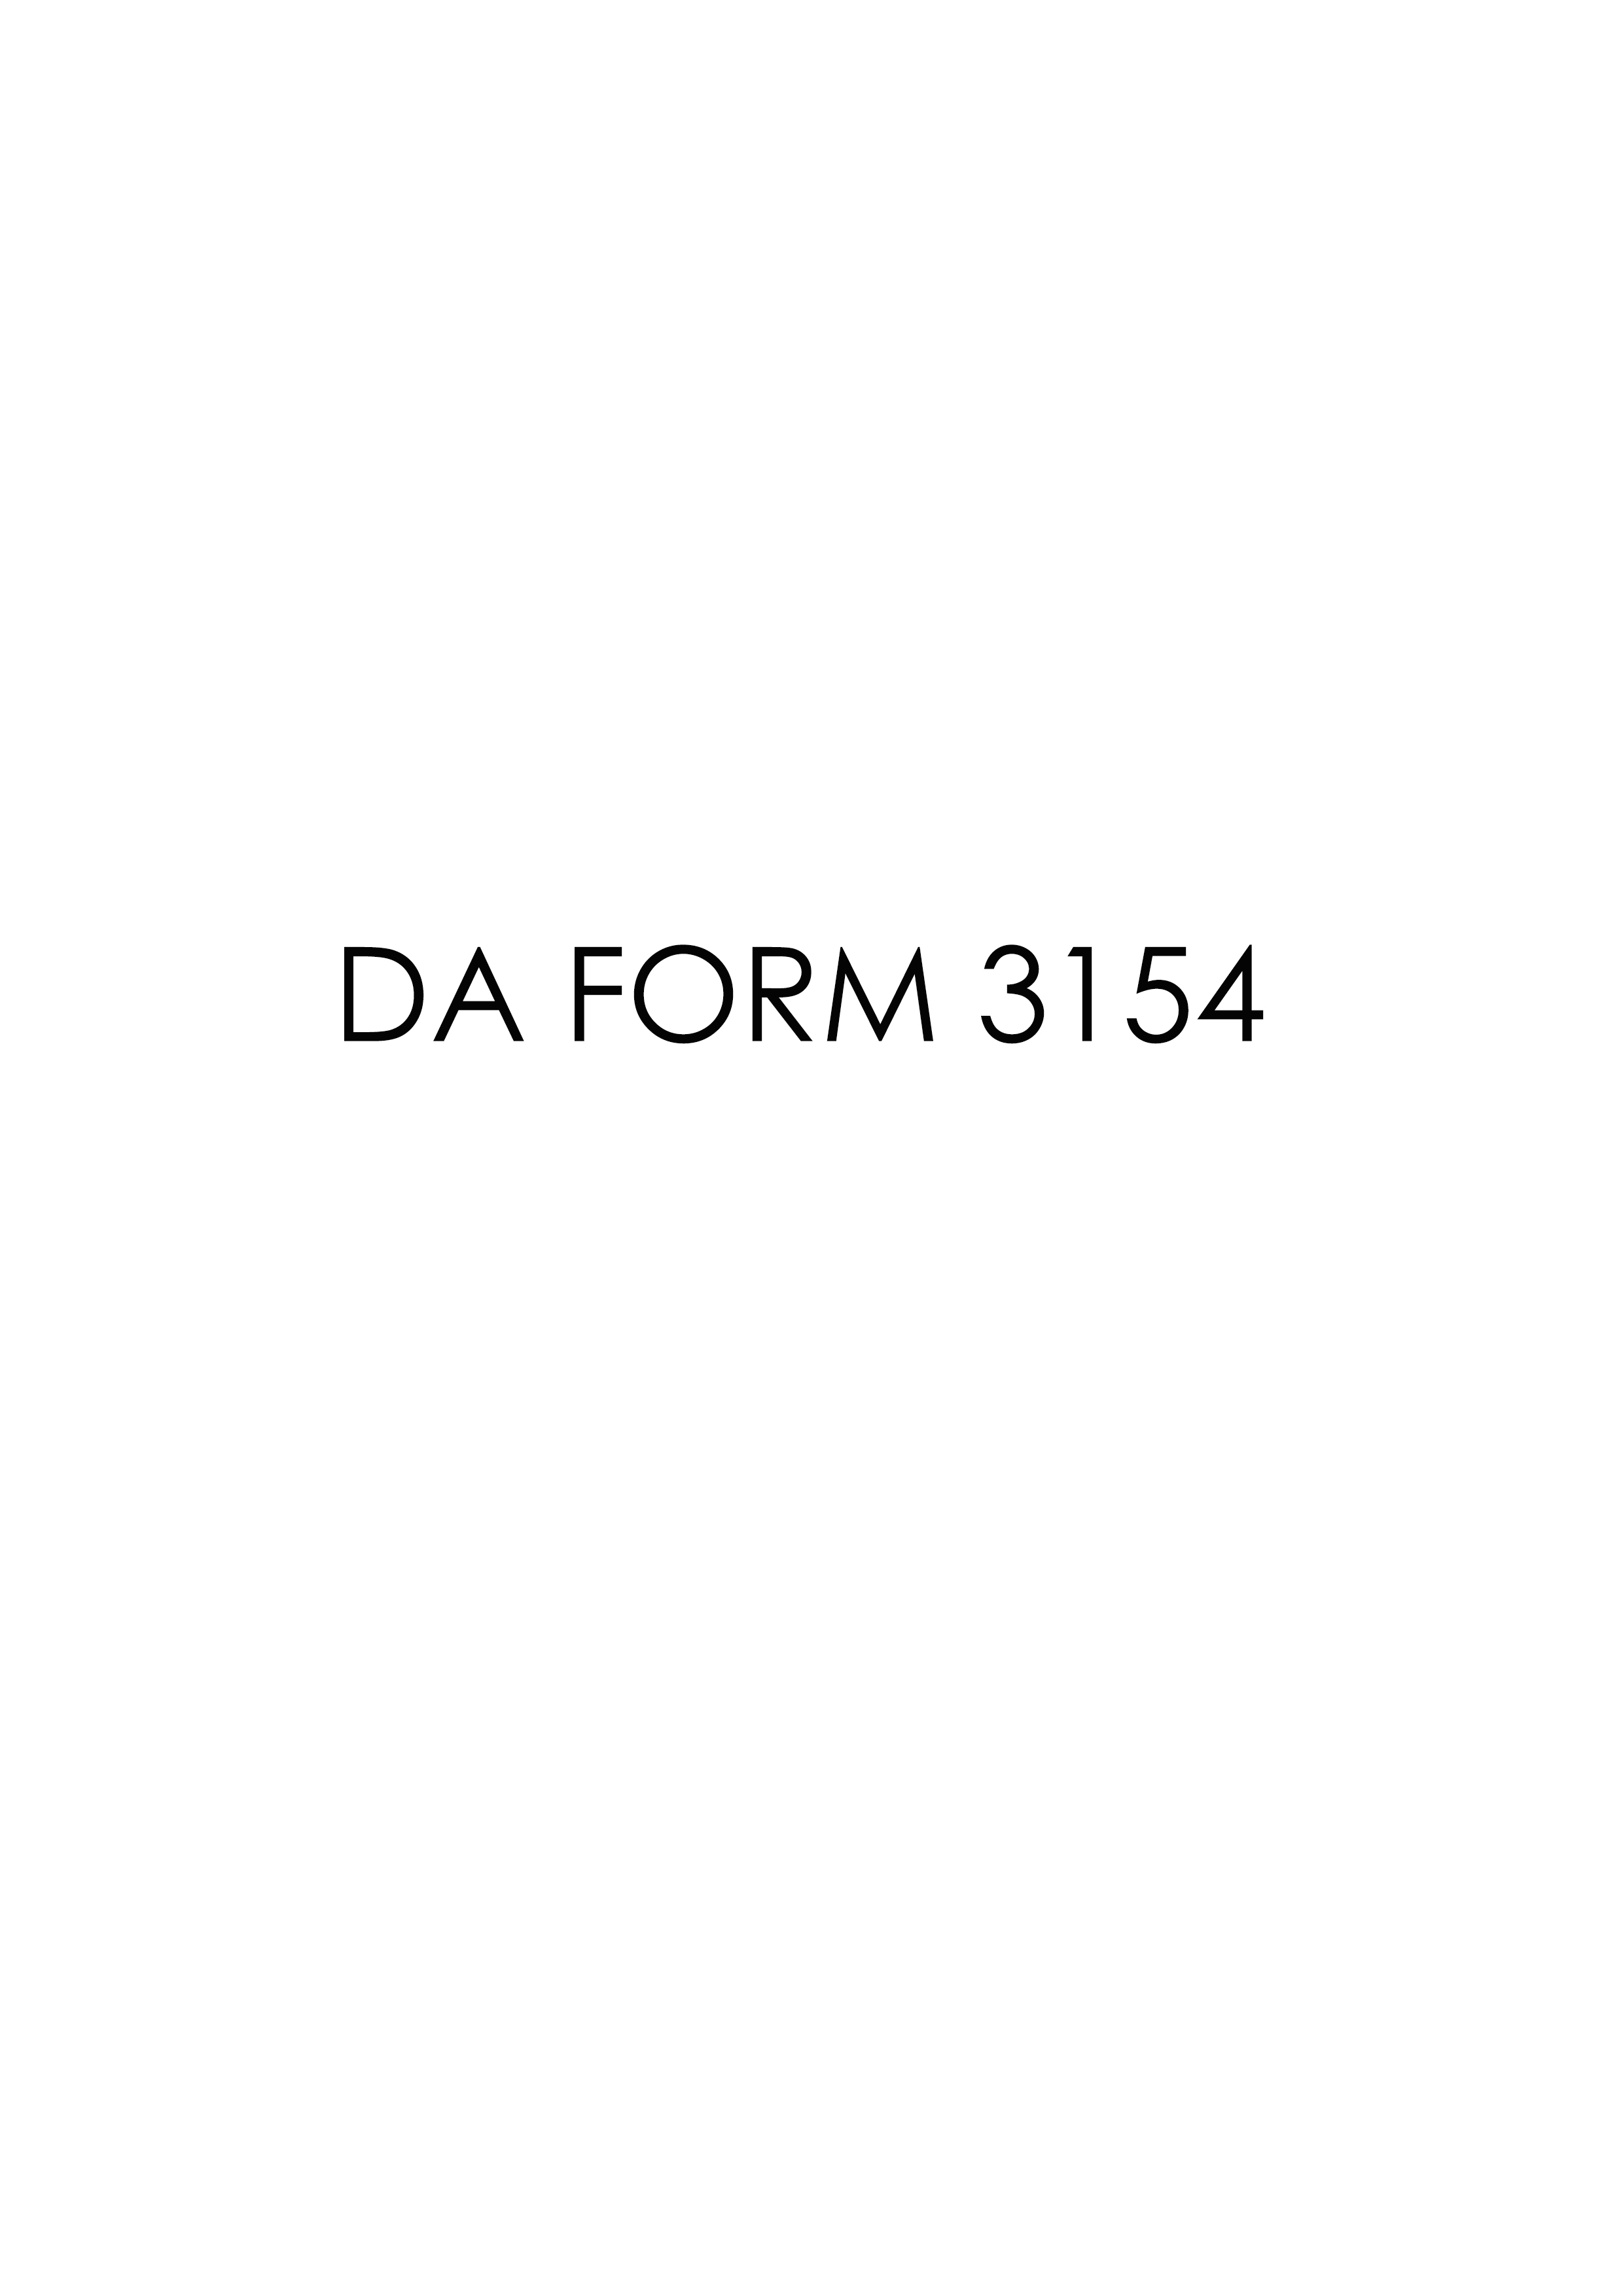 da Form 3154 fillable